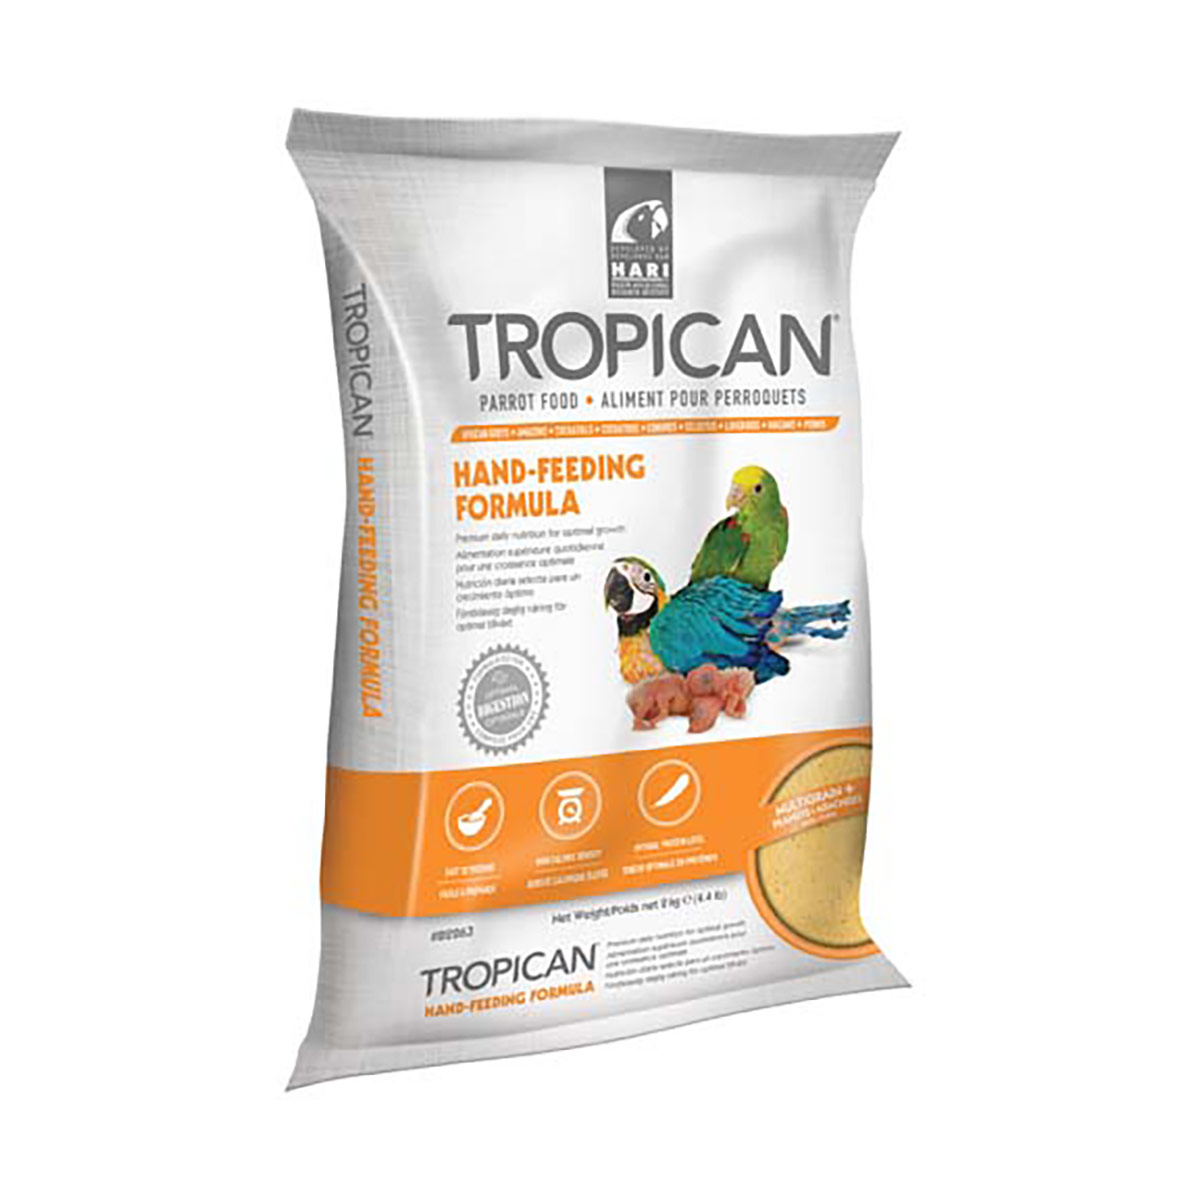 Hari Tropican Hand-Feeding Formula 2 kg